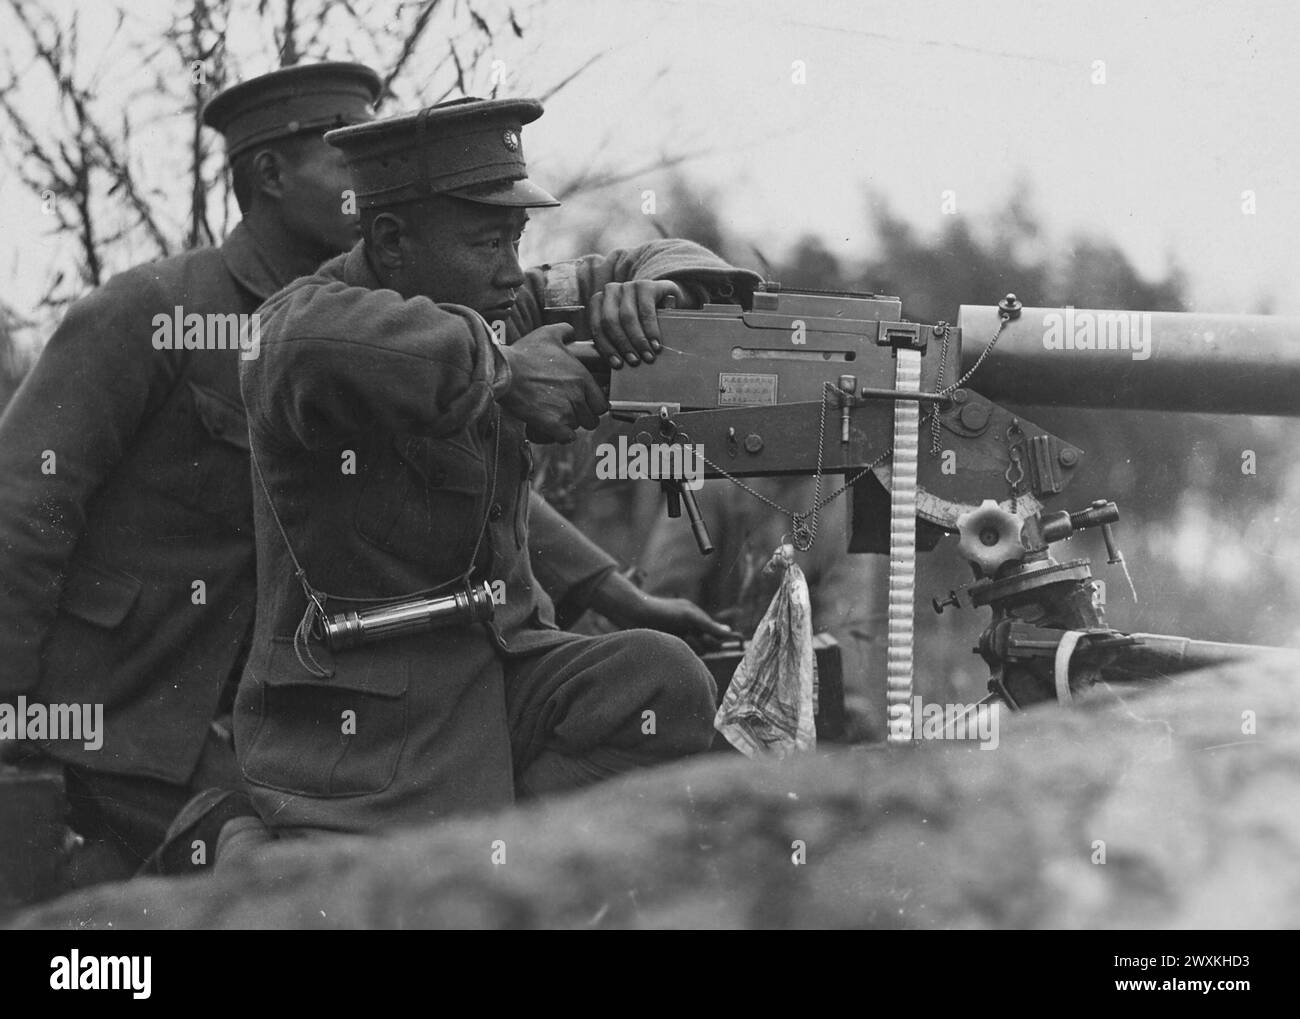 Guerra sino-giapponese, 1932 - mitragliatrici cinesi Foto Stock